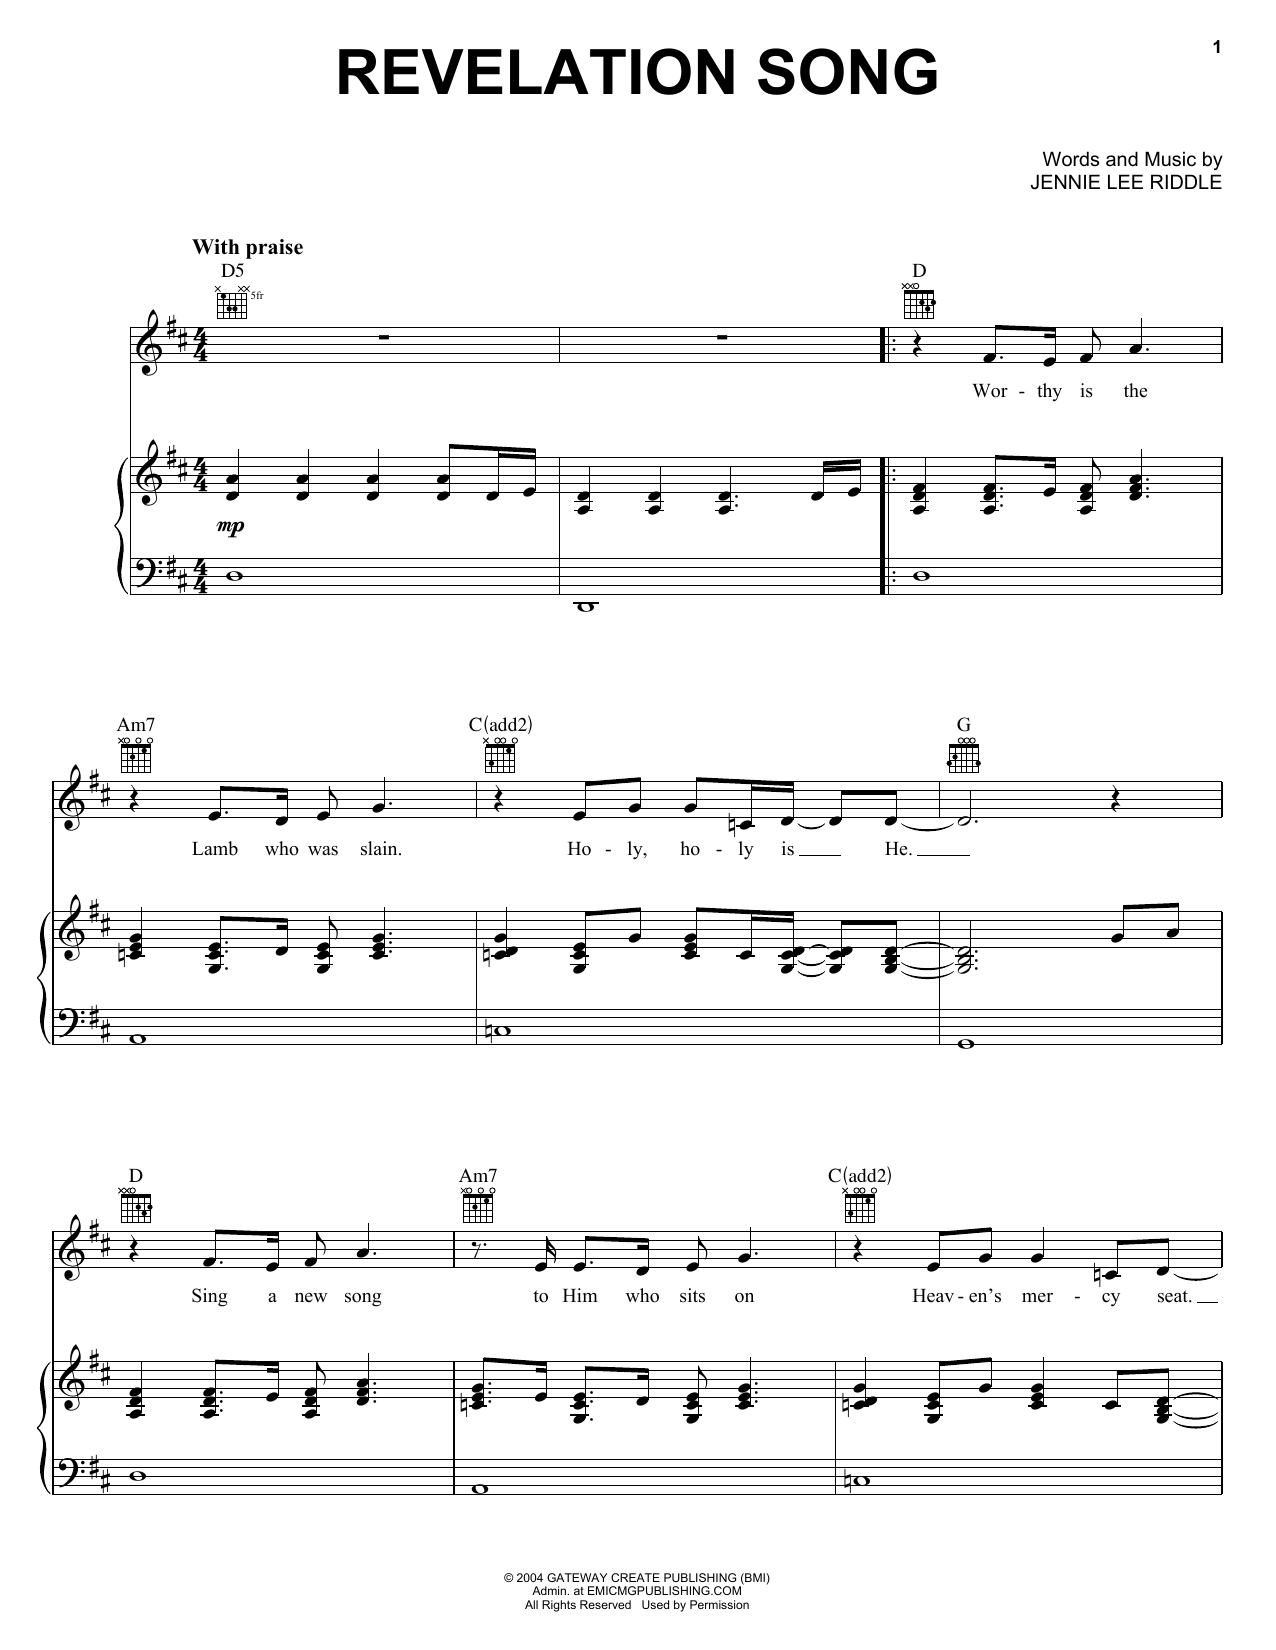 Gateway Worship Revelation Song Sheet Music Notes & Chords for Easy Guitar Tab - Download or Print PDF